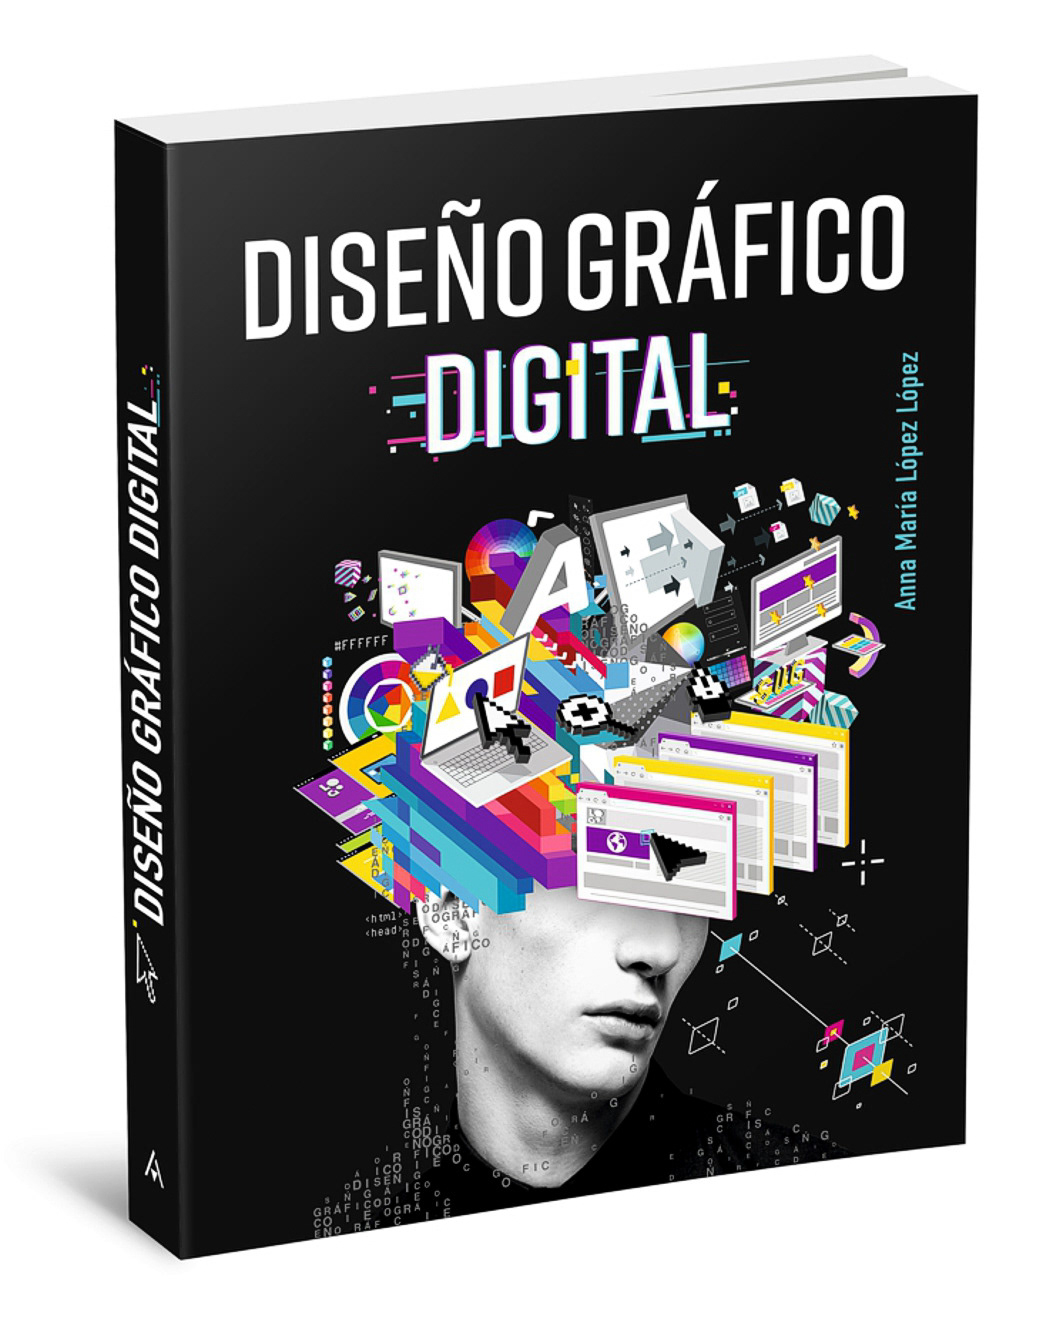 Accesorios picnic Estrictamente BOOK COVER DESIGN DISENO GRAFICO DIGITAL on Behance